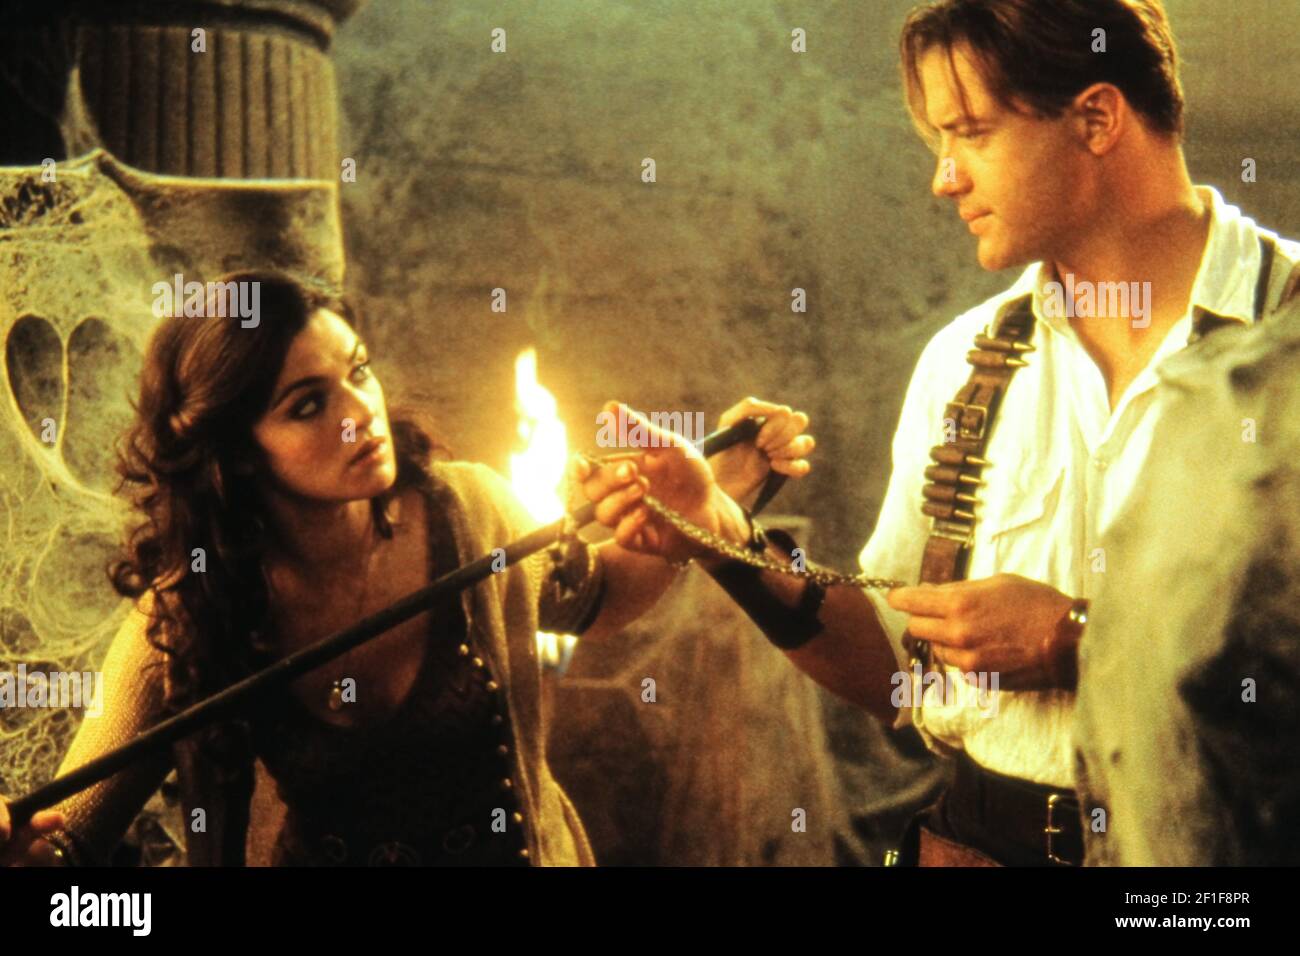 Brendan Fraser, Rachel Weisz, 'The Mummy Returns' (2001) Universal Pictures. Photo Credit: Keith Hamshere /Universal Pictures /The Hollywood Archive - File Reference # 34082-1102THA Stock Photo